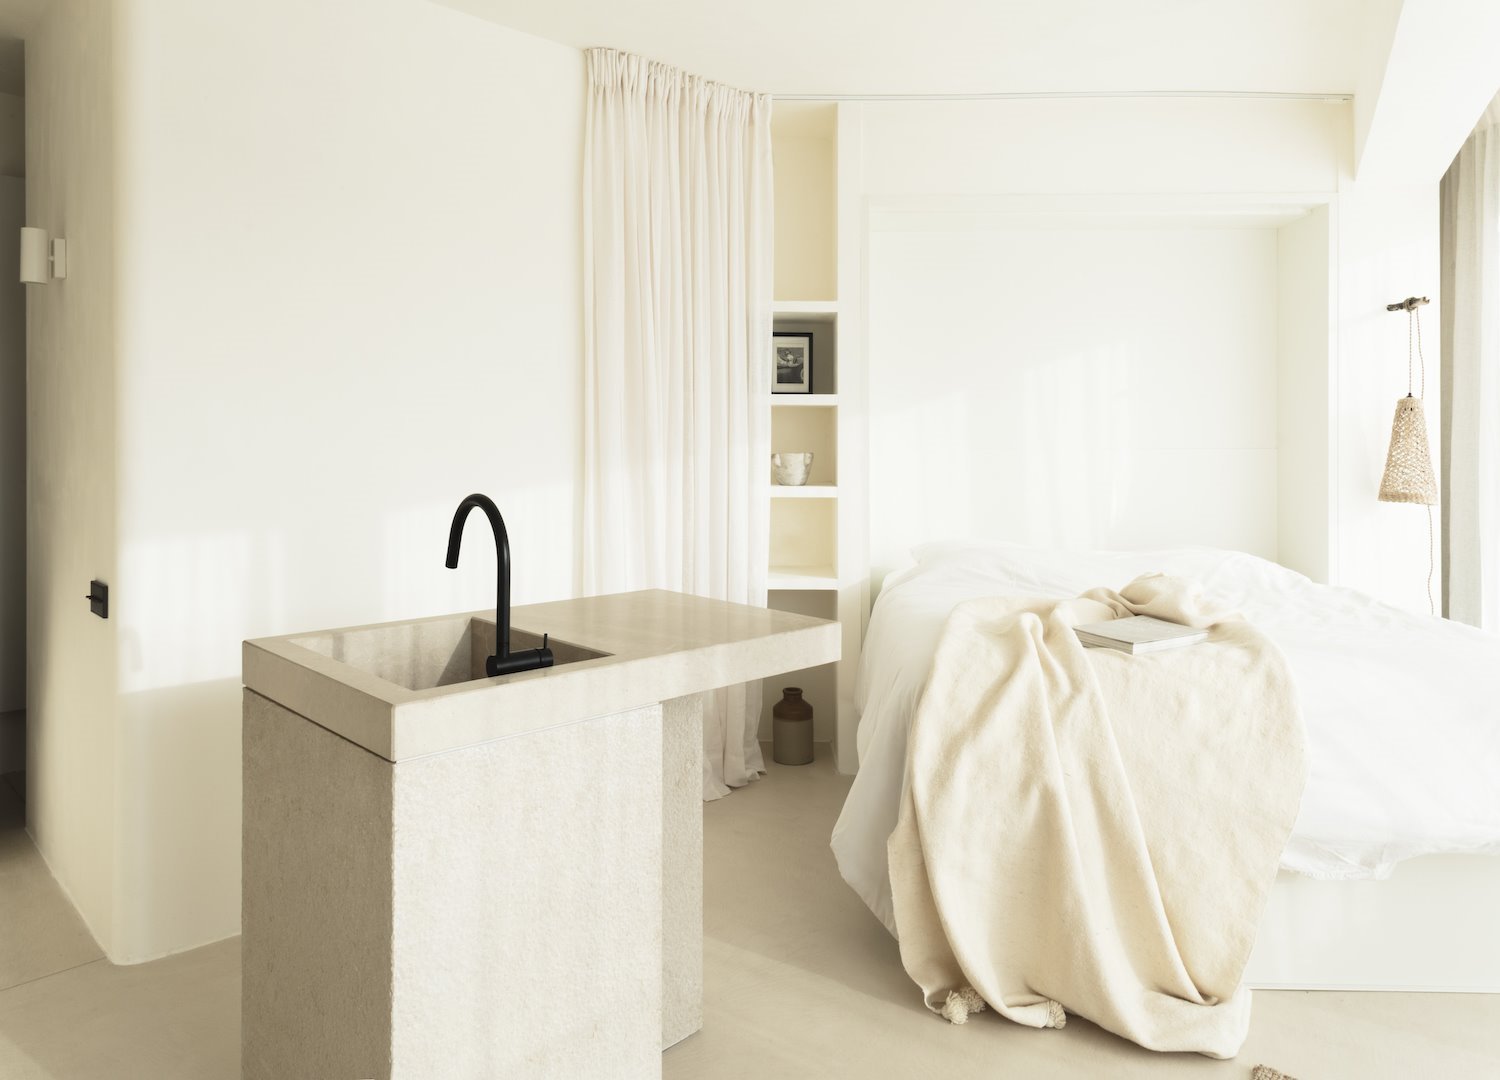 mini-piso-en-color-blancobano-dormitorio 8356e778 1500x1080